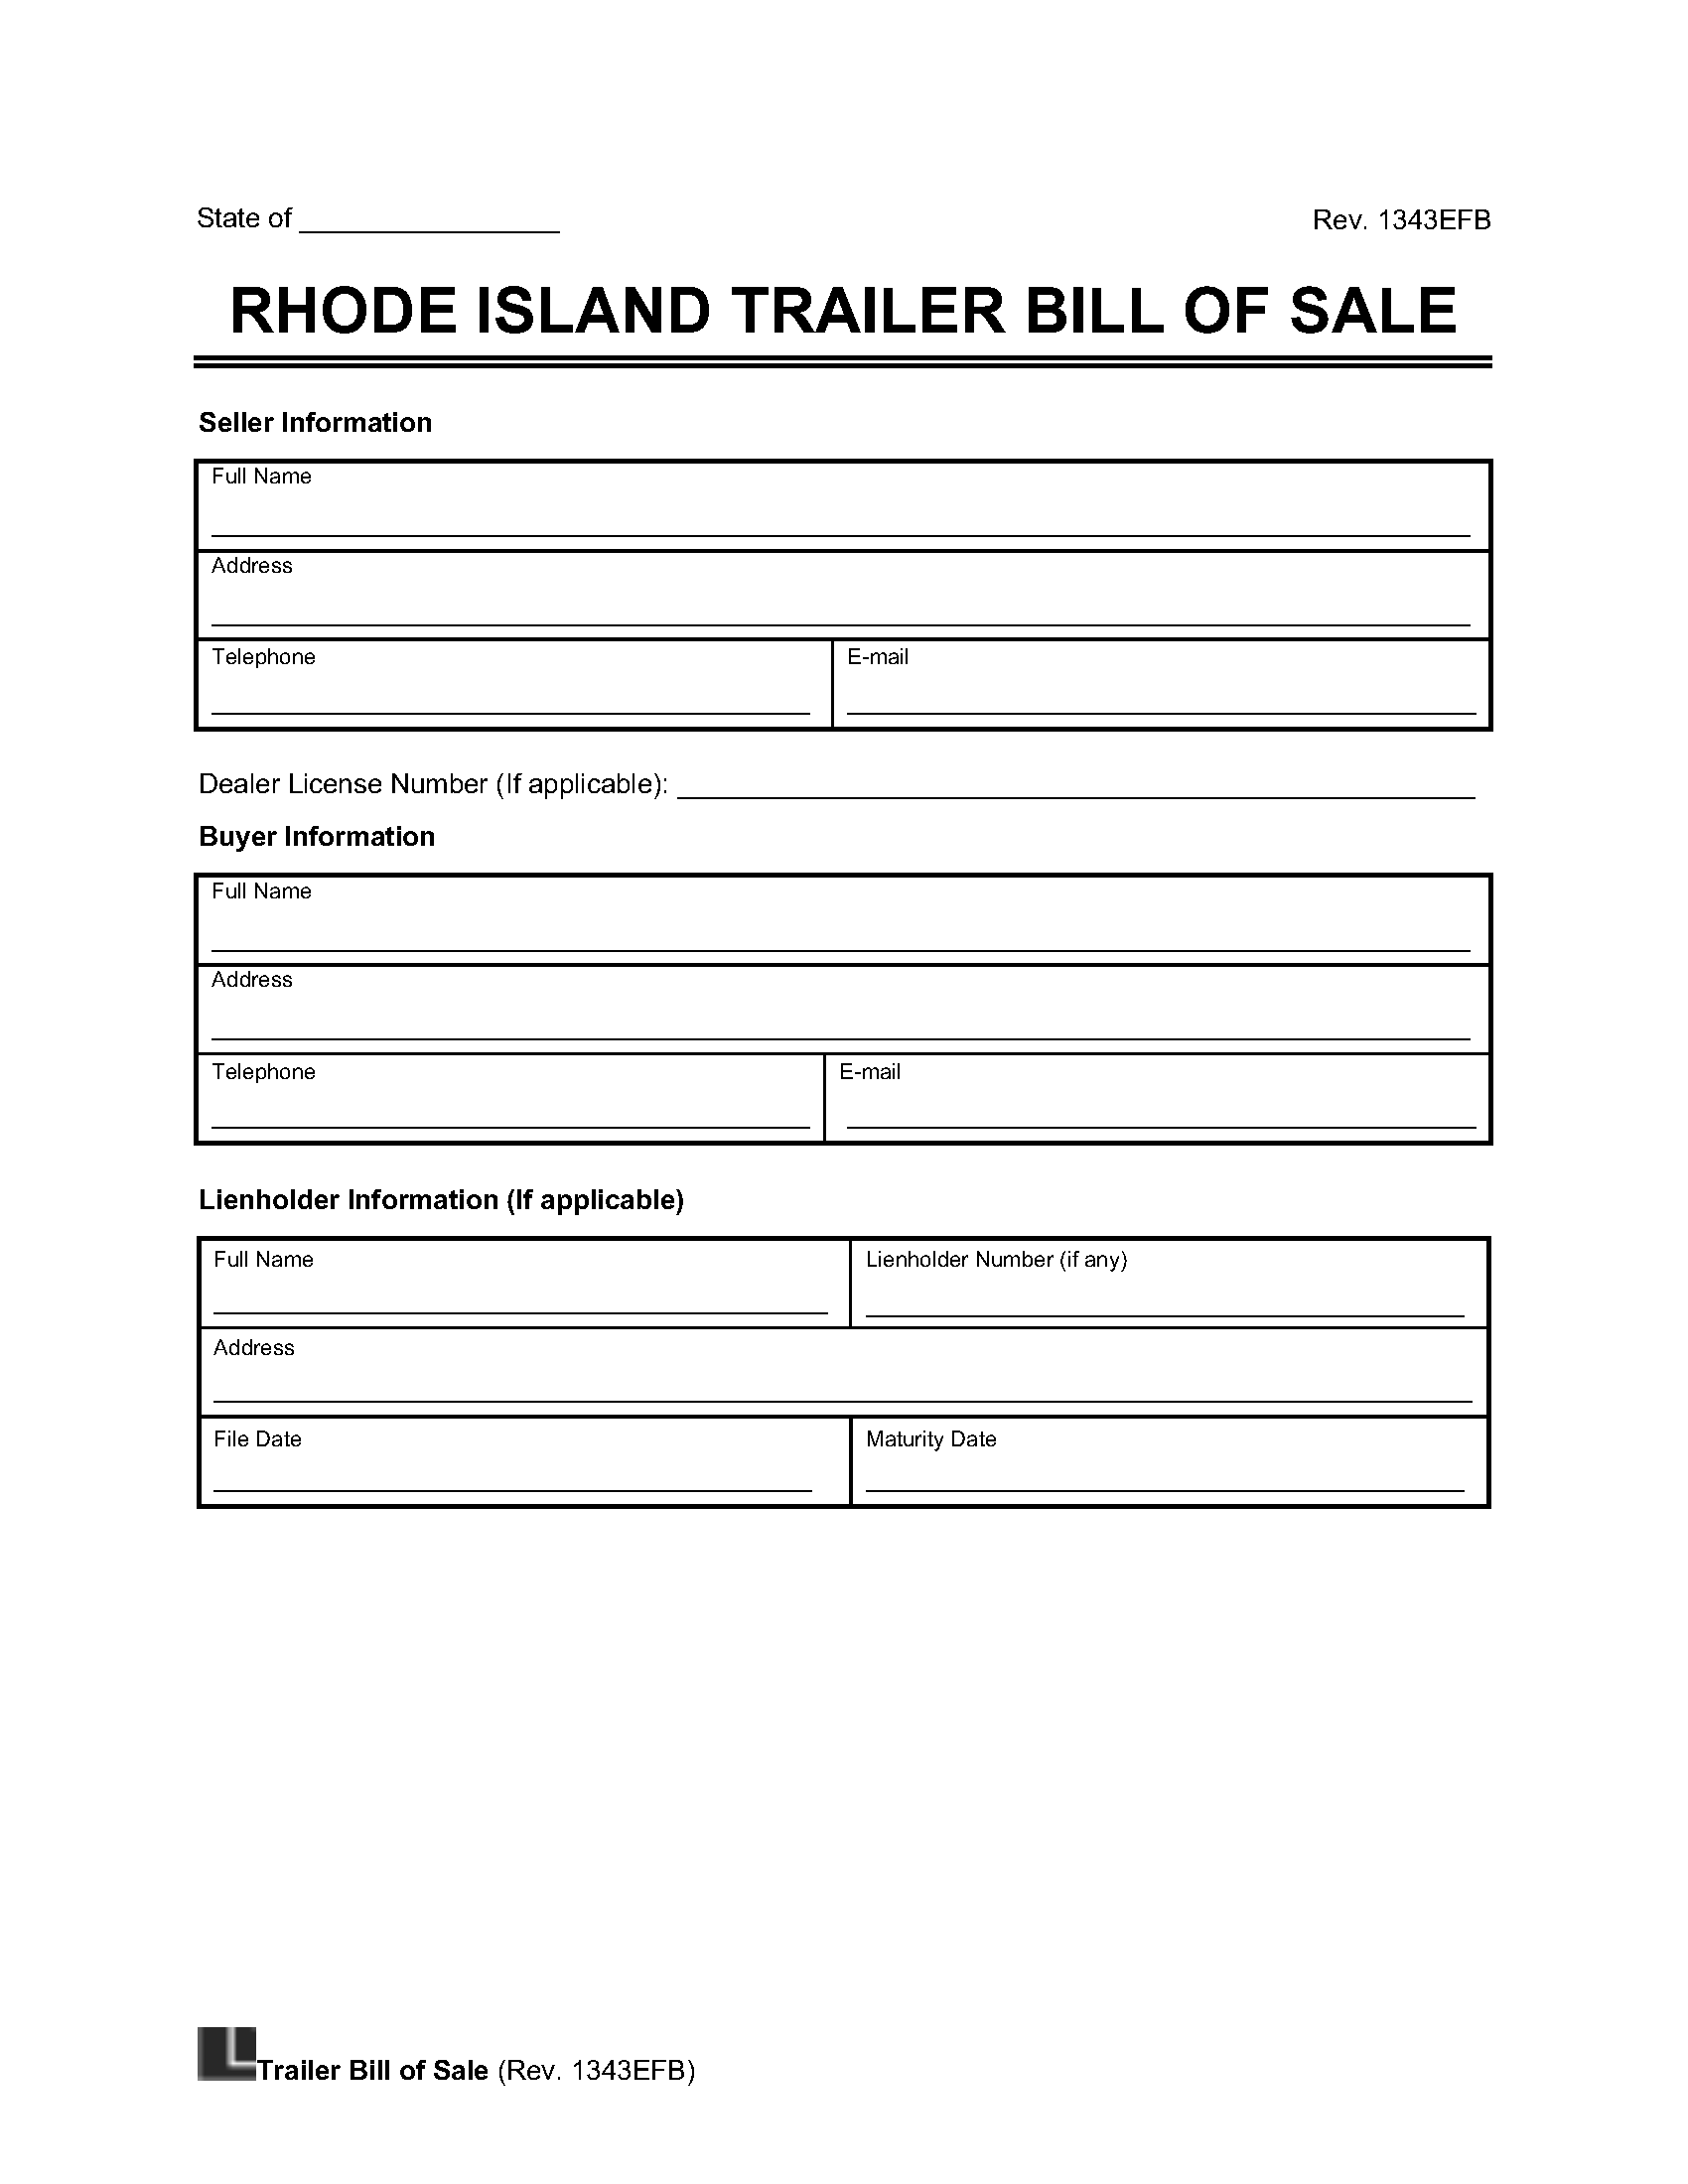 Rhode Island Trailer Bill of Sale screenshot